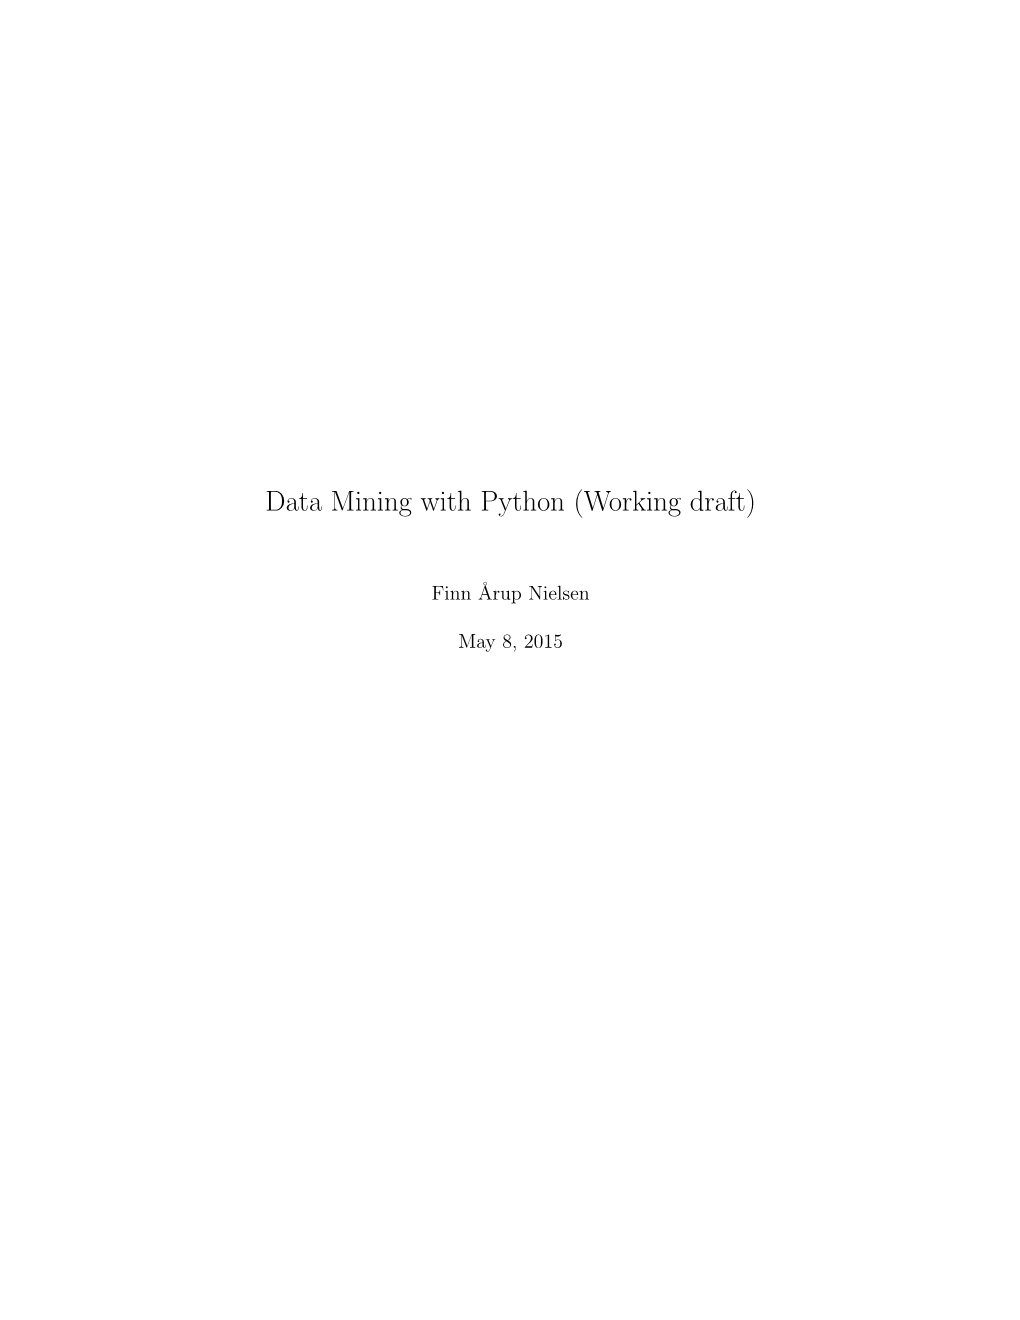 Data Mining with Python (Working Draft)